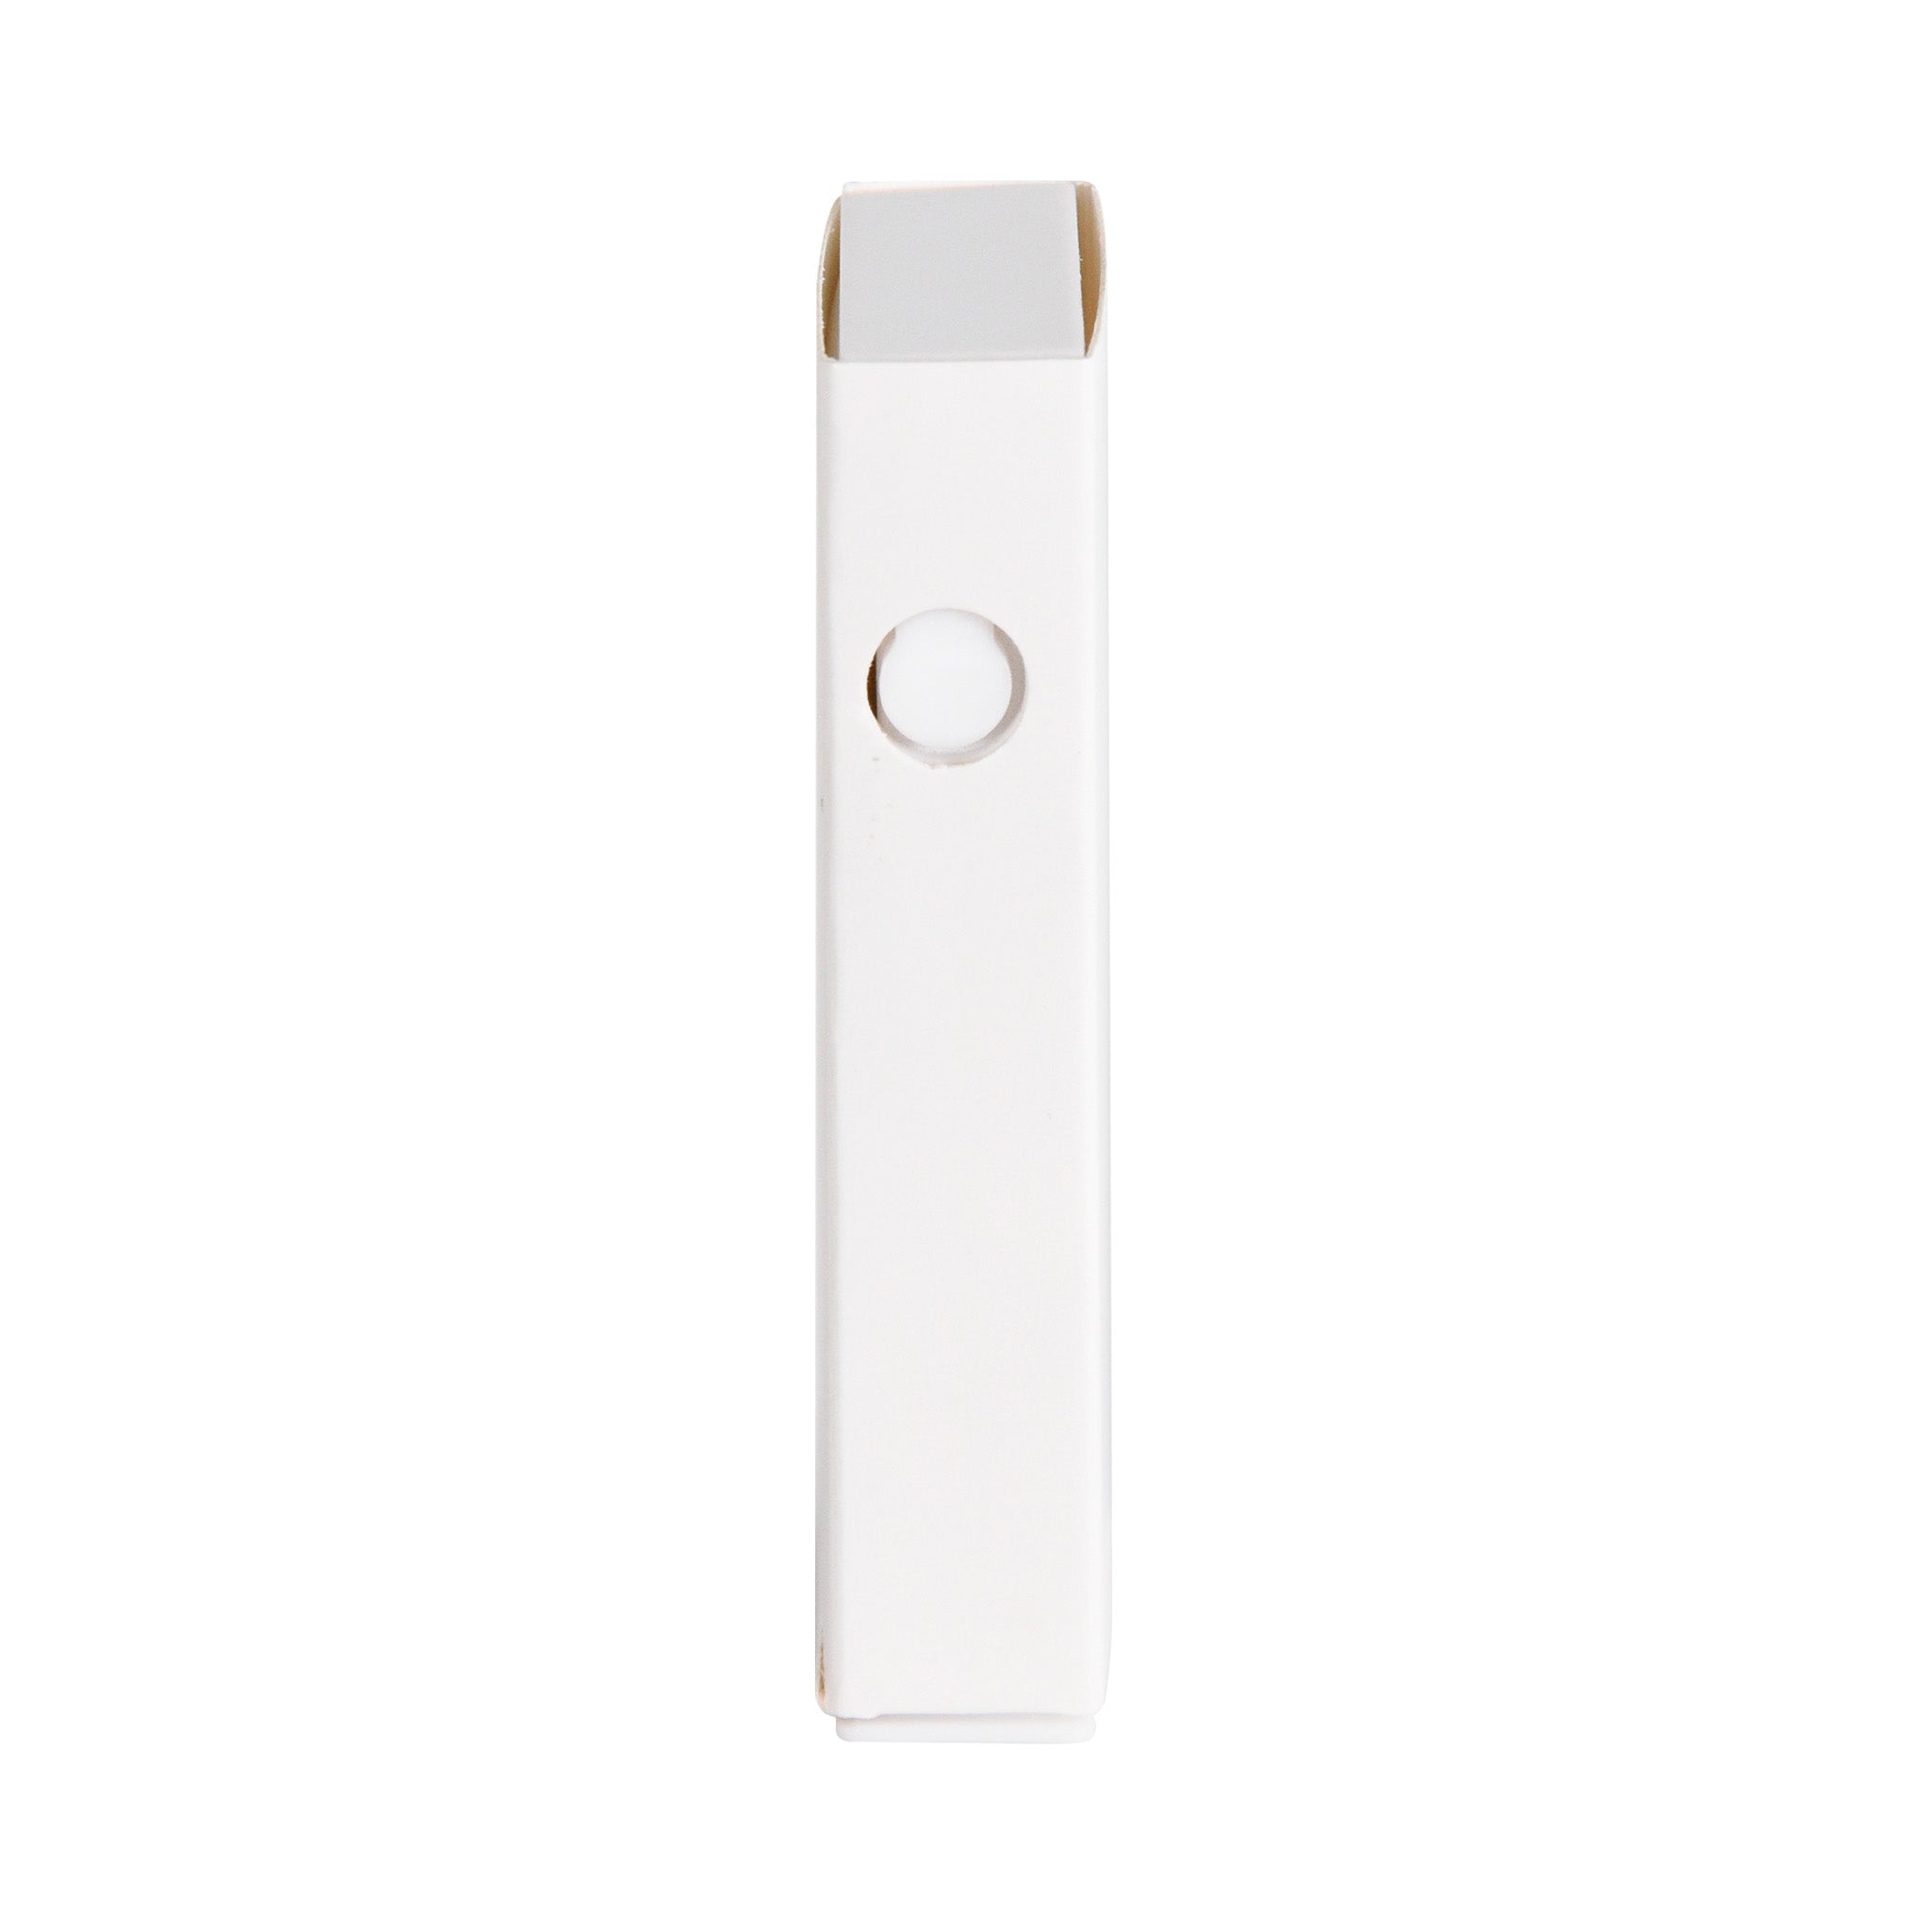 Child Resistant White Vape Cartridge Slide Out Box-Cartridge Packaging-Vape Pens Wholesale